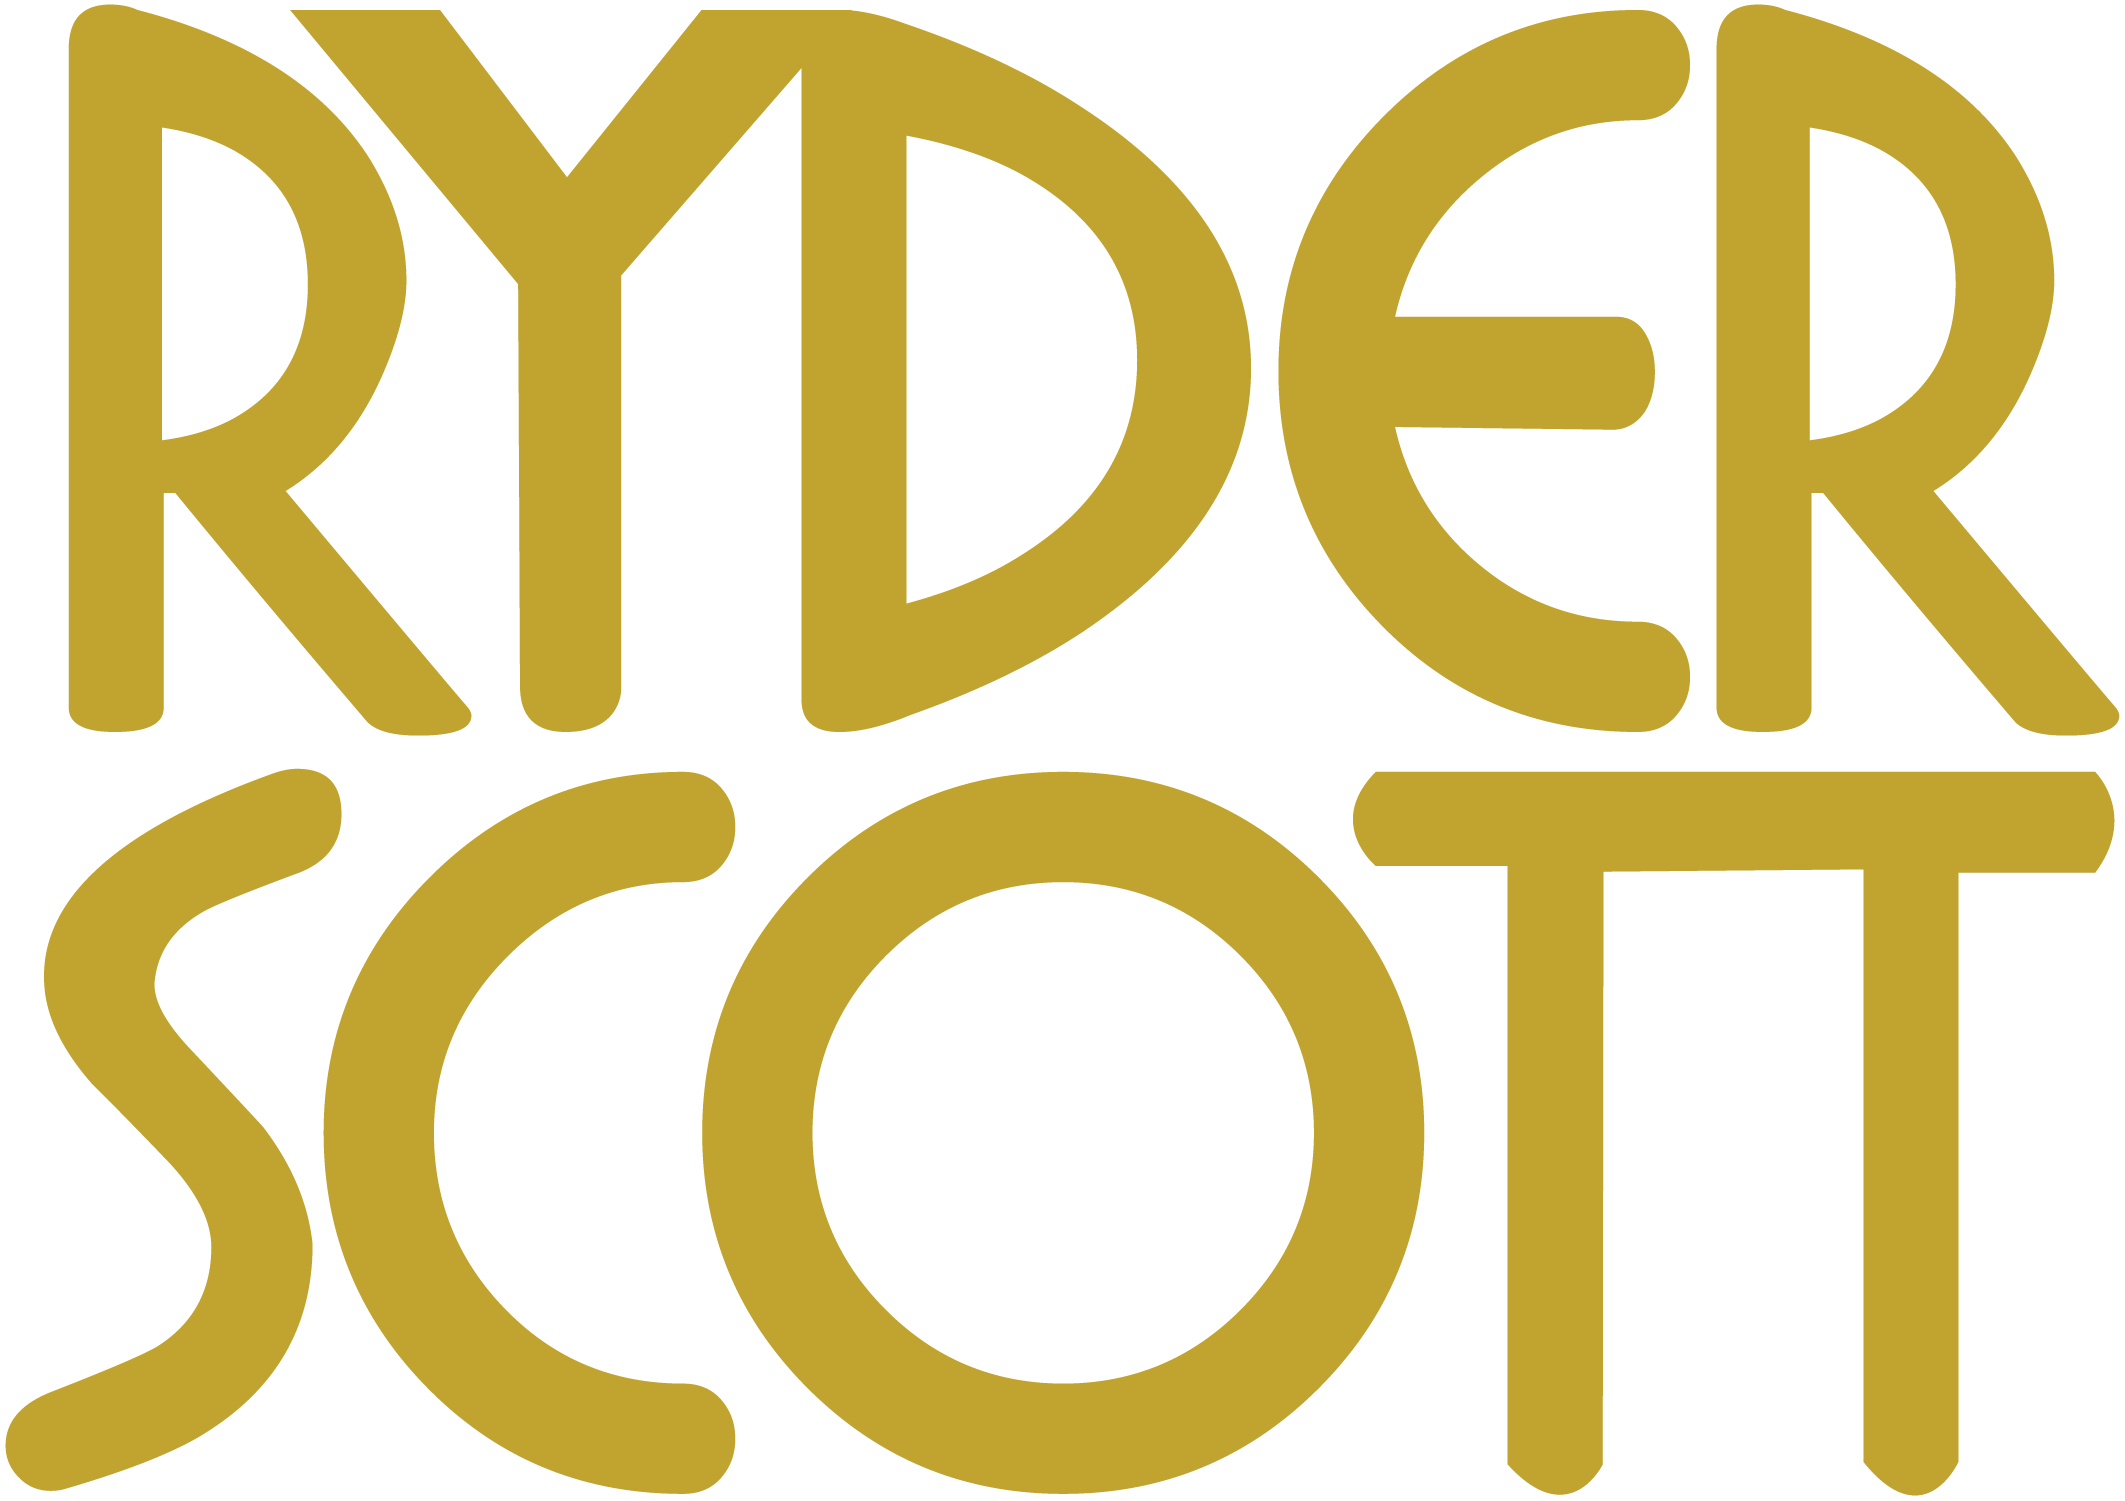 Ryder Scott